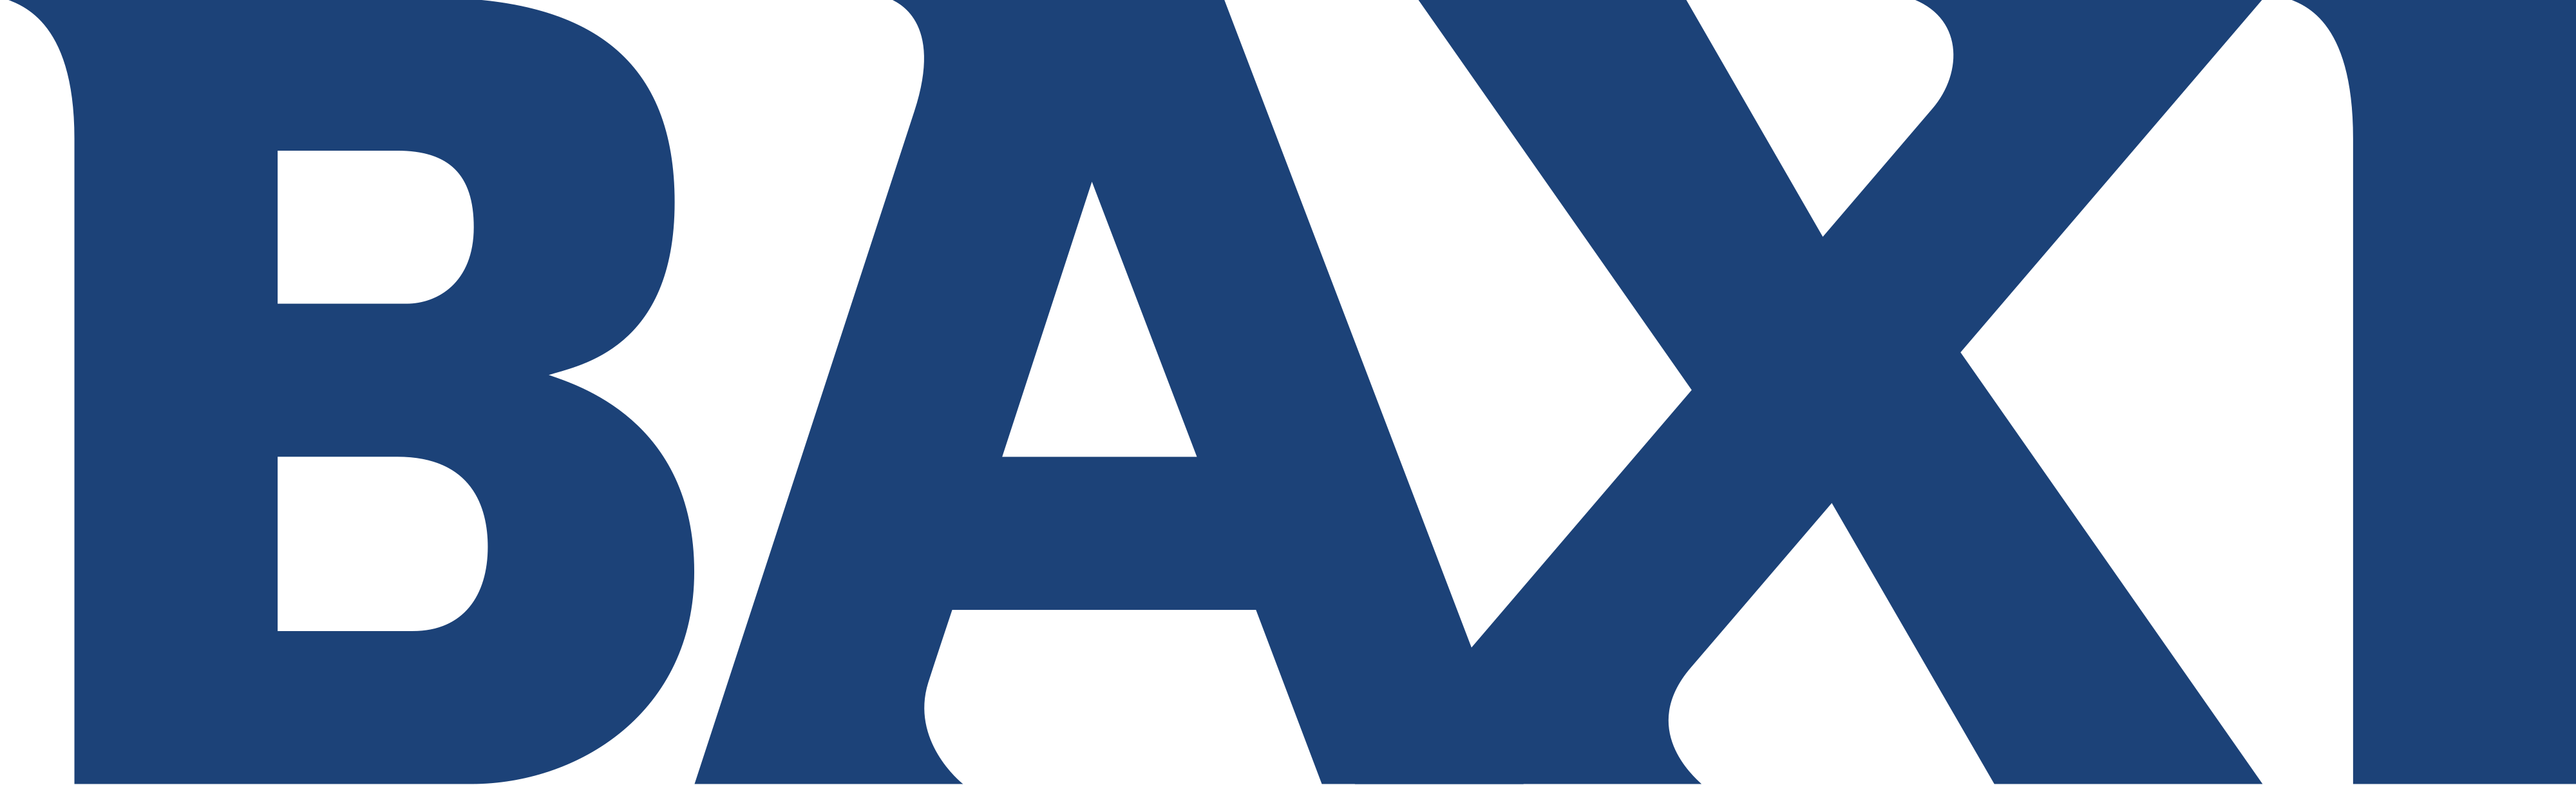 Baxi Group Ltd logo - download.